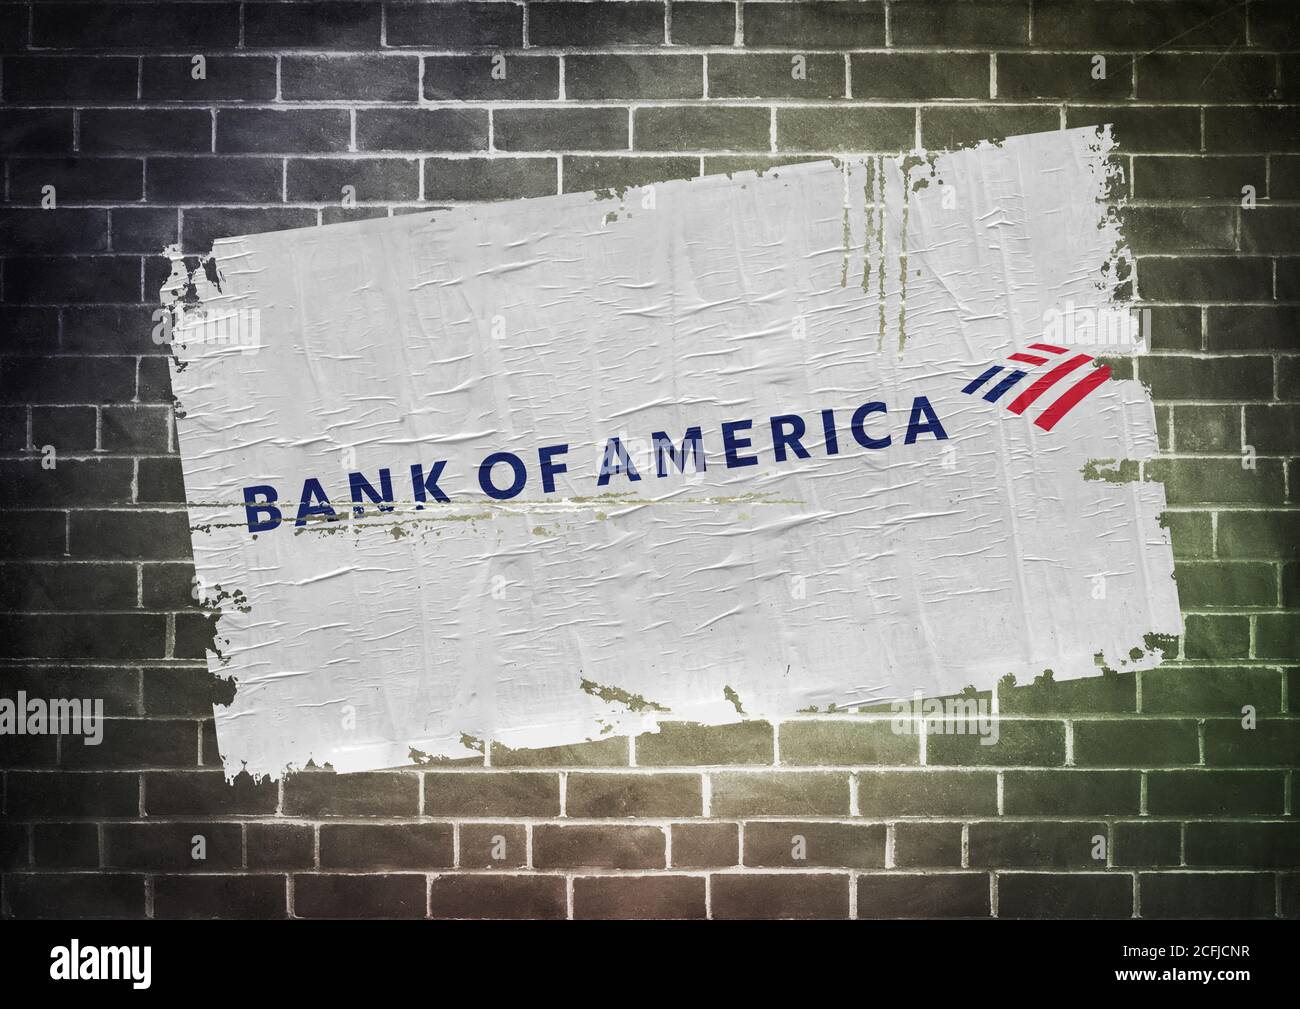 Bank of America Stock Photo